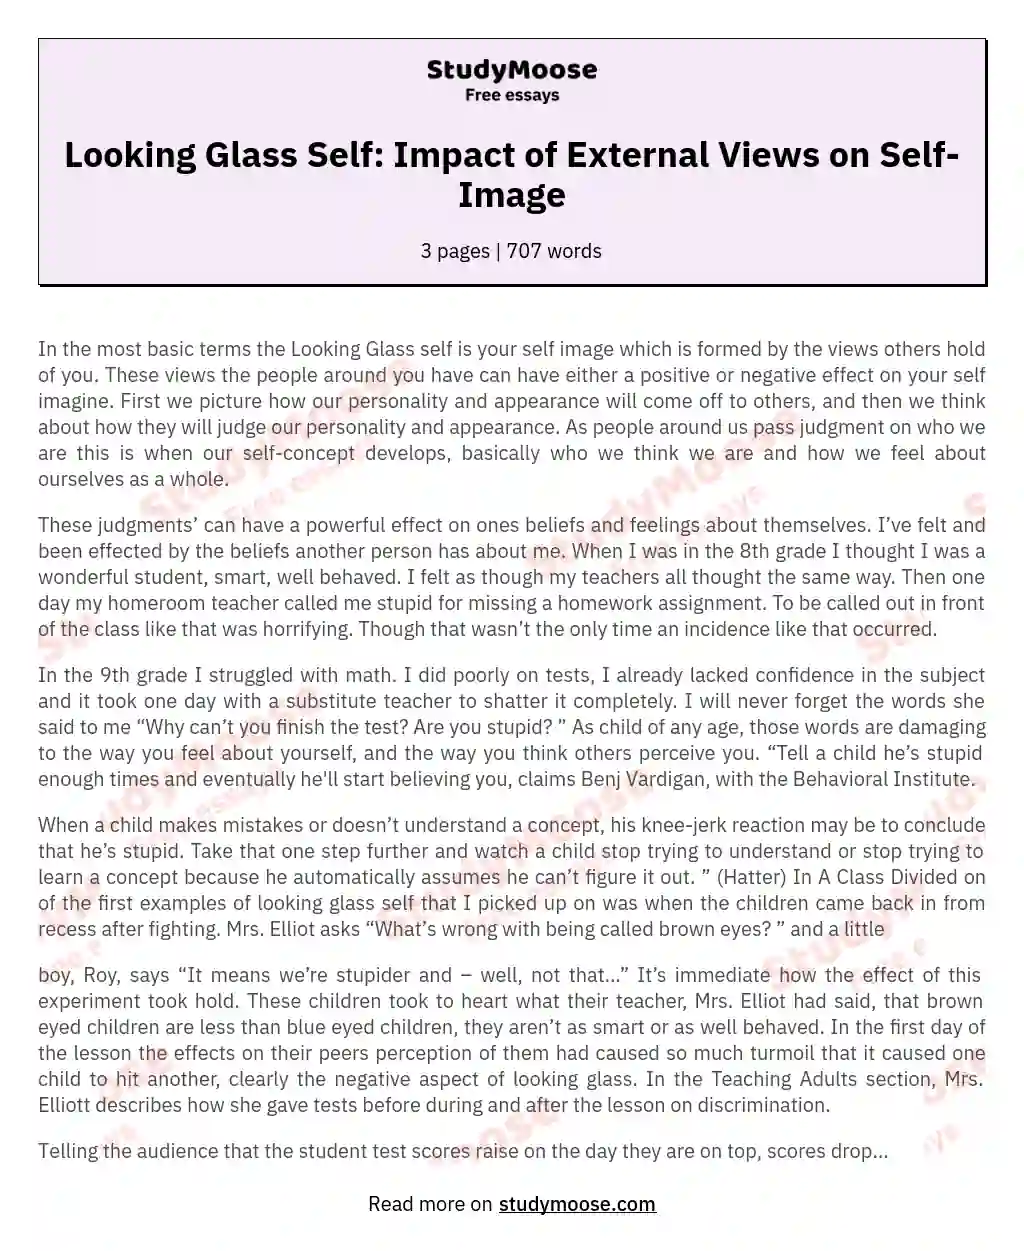 Looking Glass Self: Impact of External Views on Self-Image essay